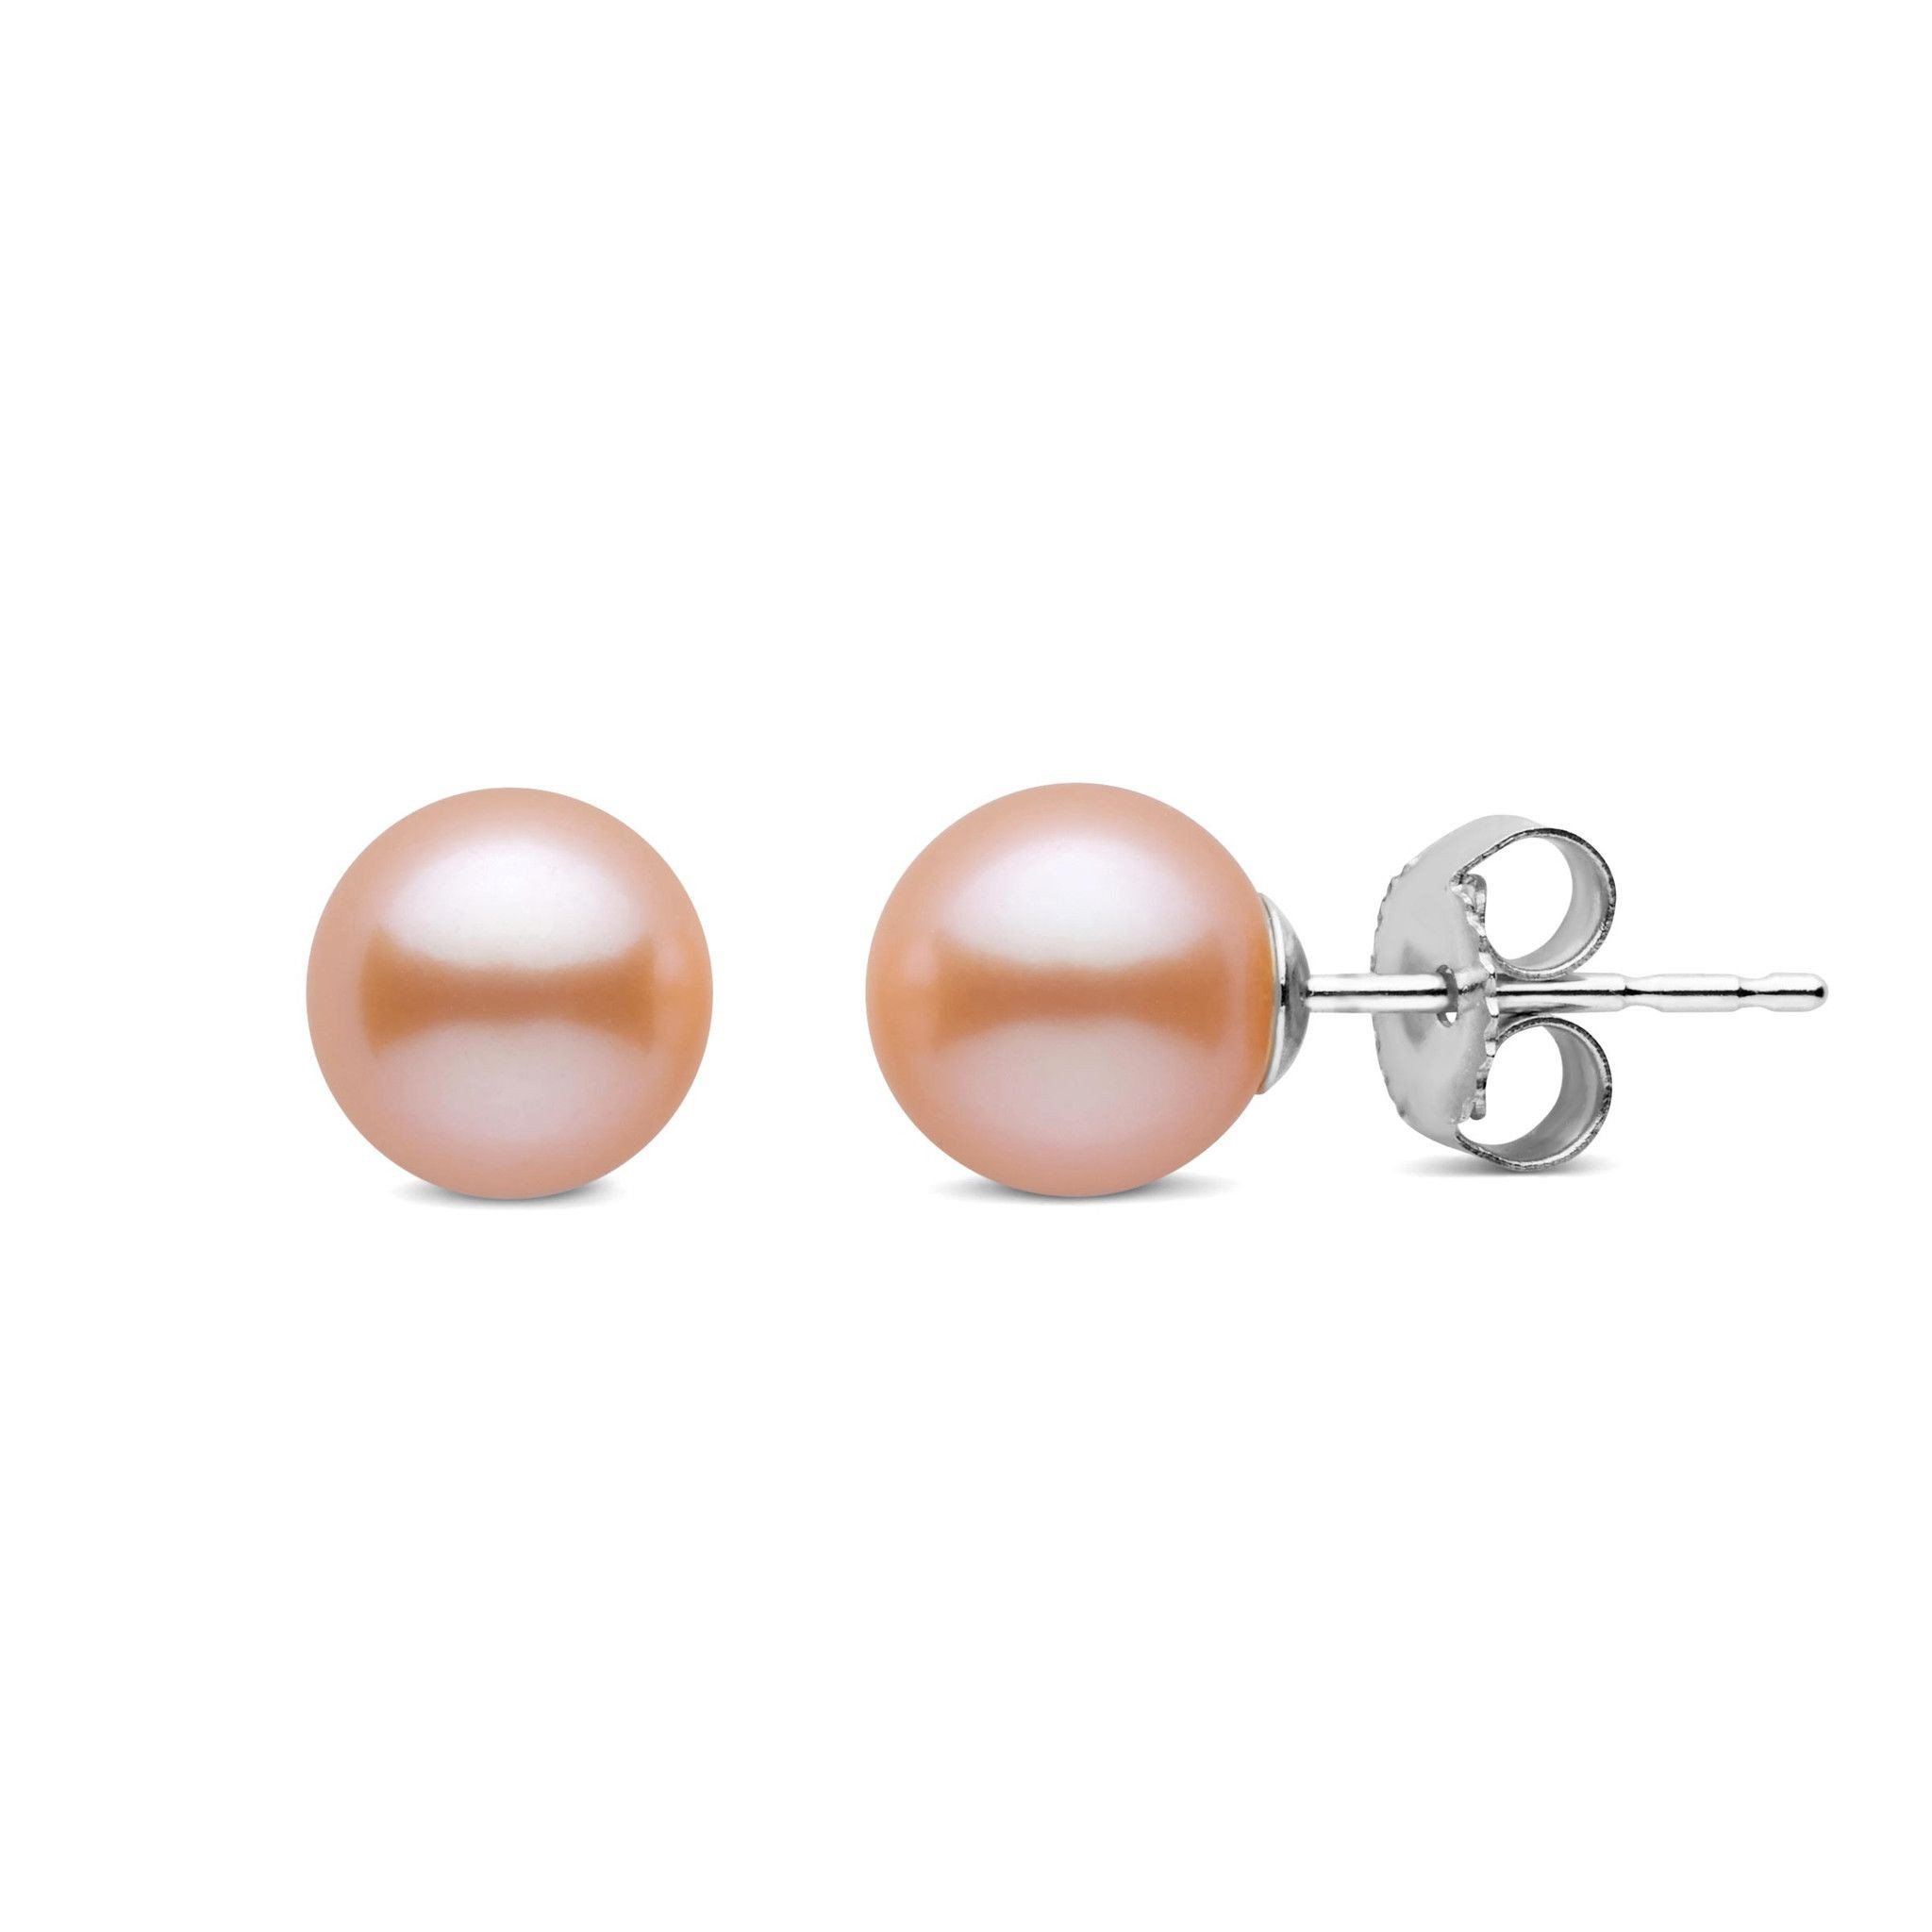 6.5-7.0 mm Pink to Peach Freshadama Freshwater Pearl Stud Earrings White Gold